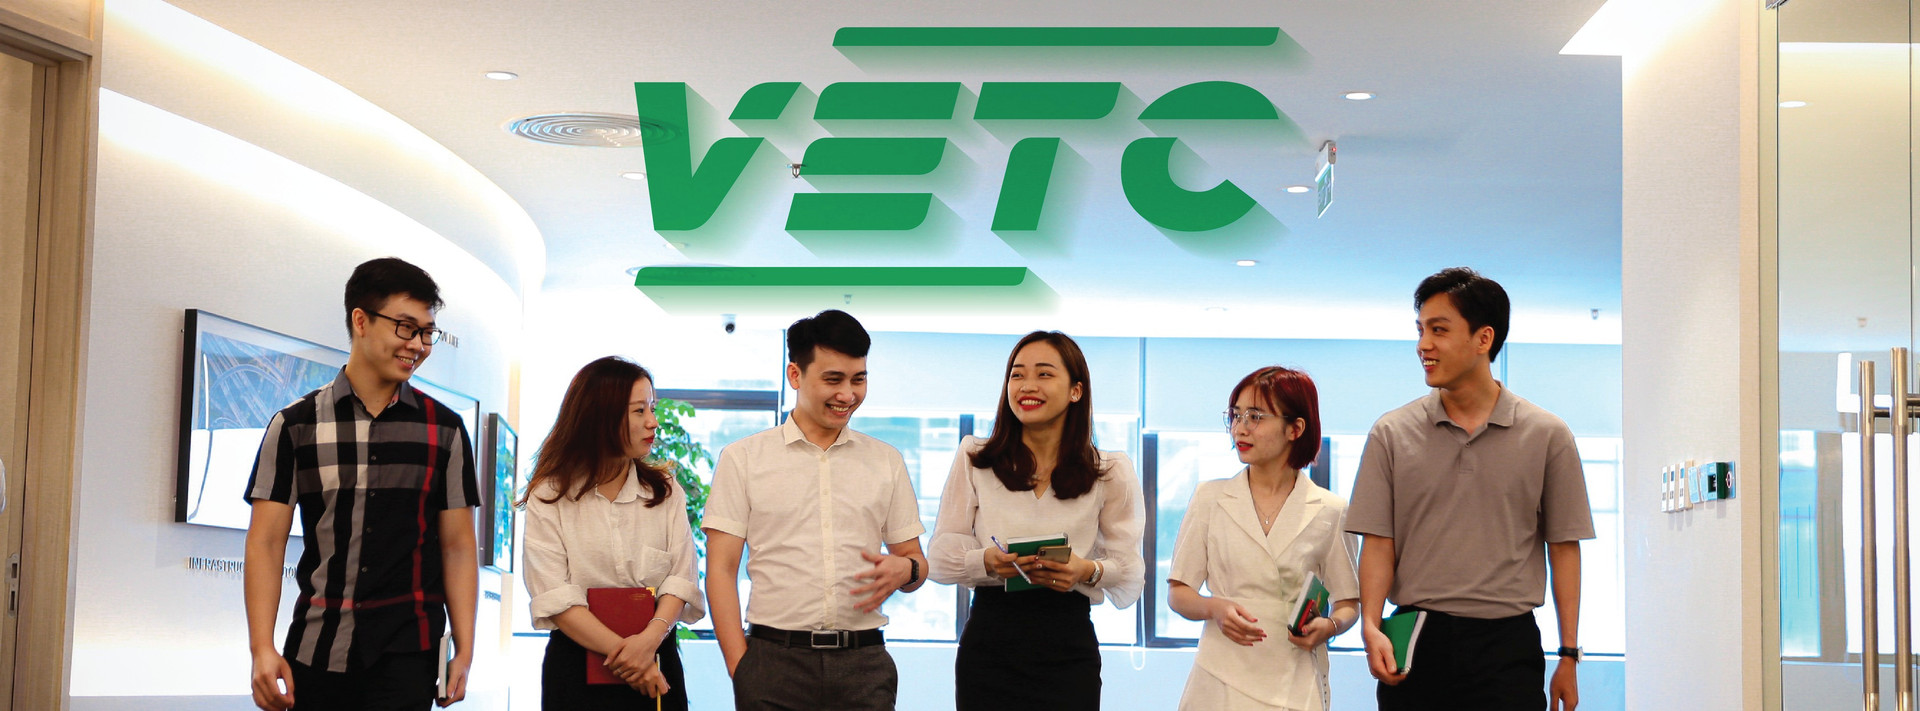 VETC Viet Nam Joint Stock Company